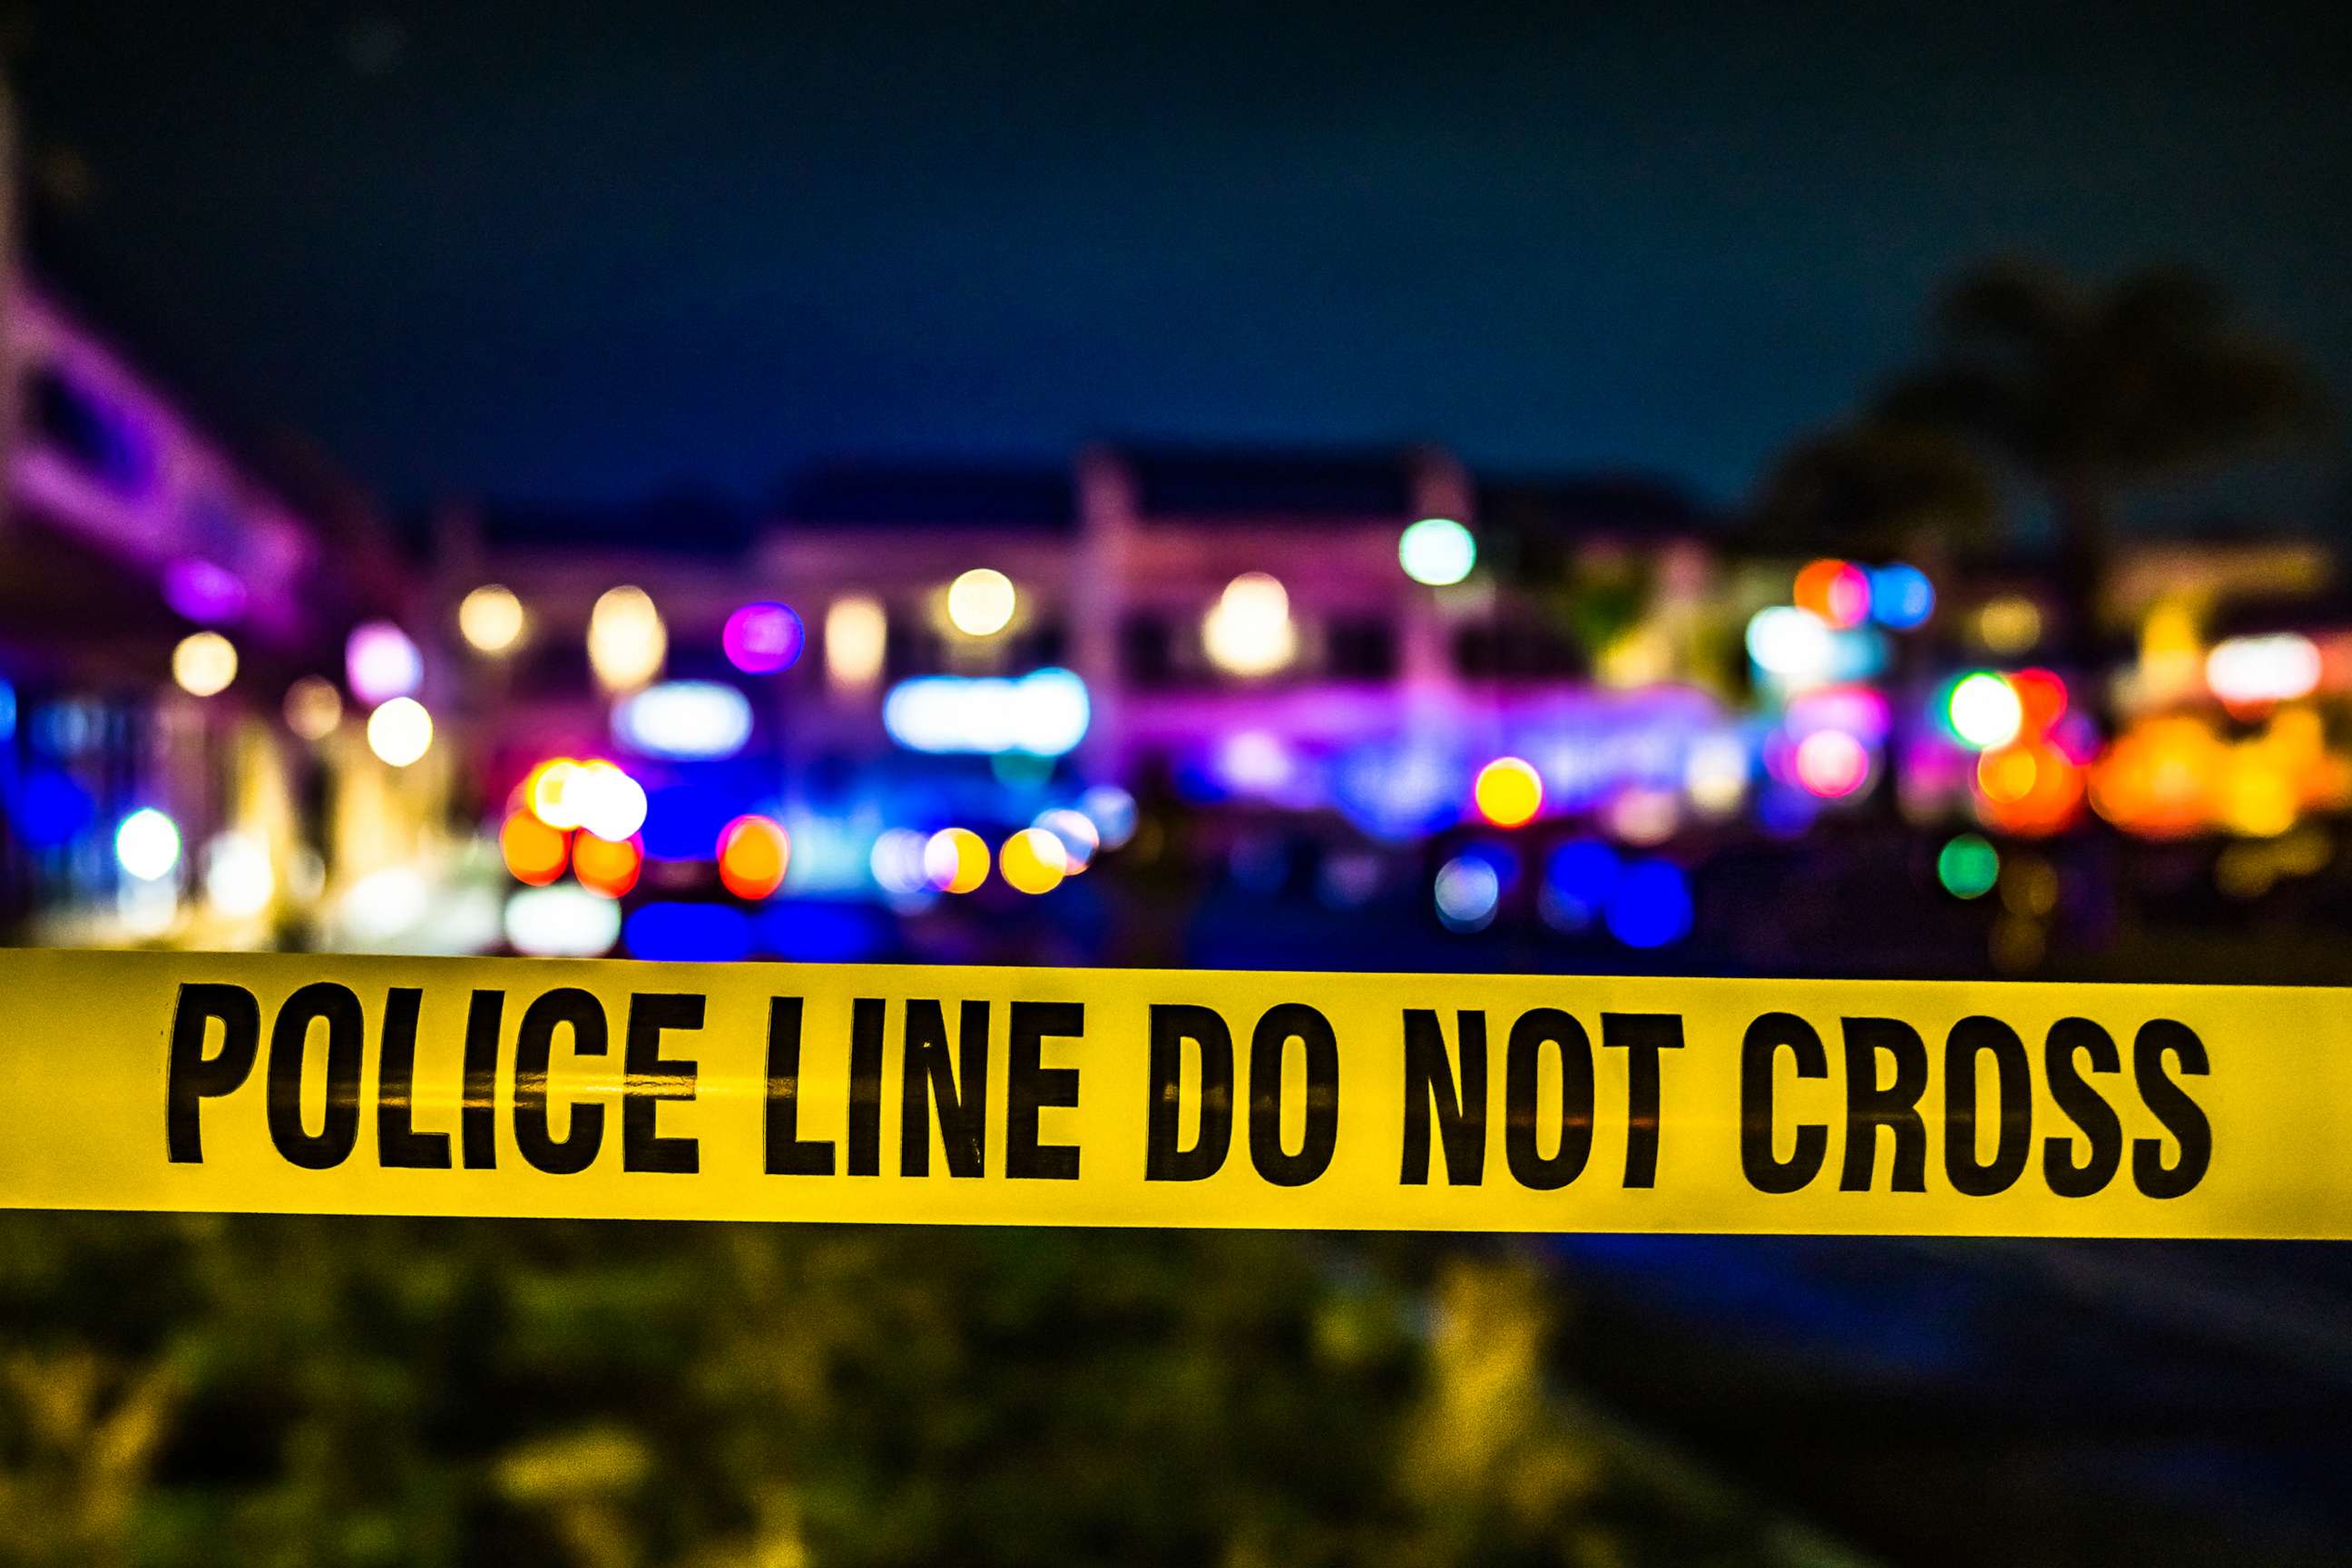 PHOTO: police line yellow tape marking crime scene at night